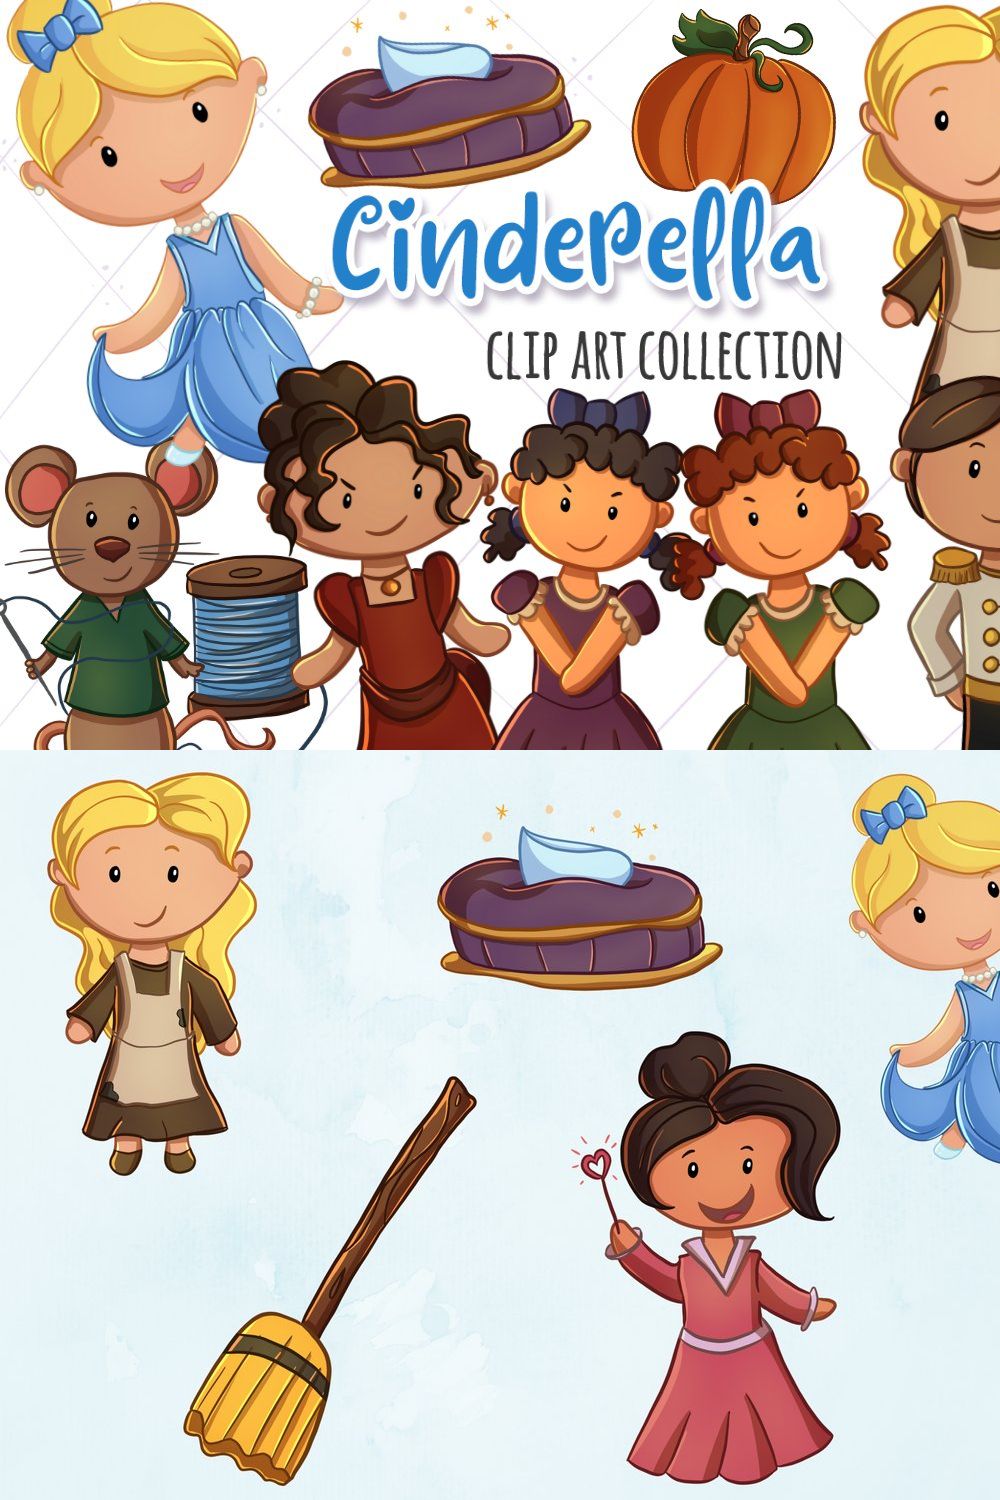 Cinderella Clip Art Collection pinterest preview image.